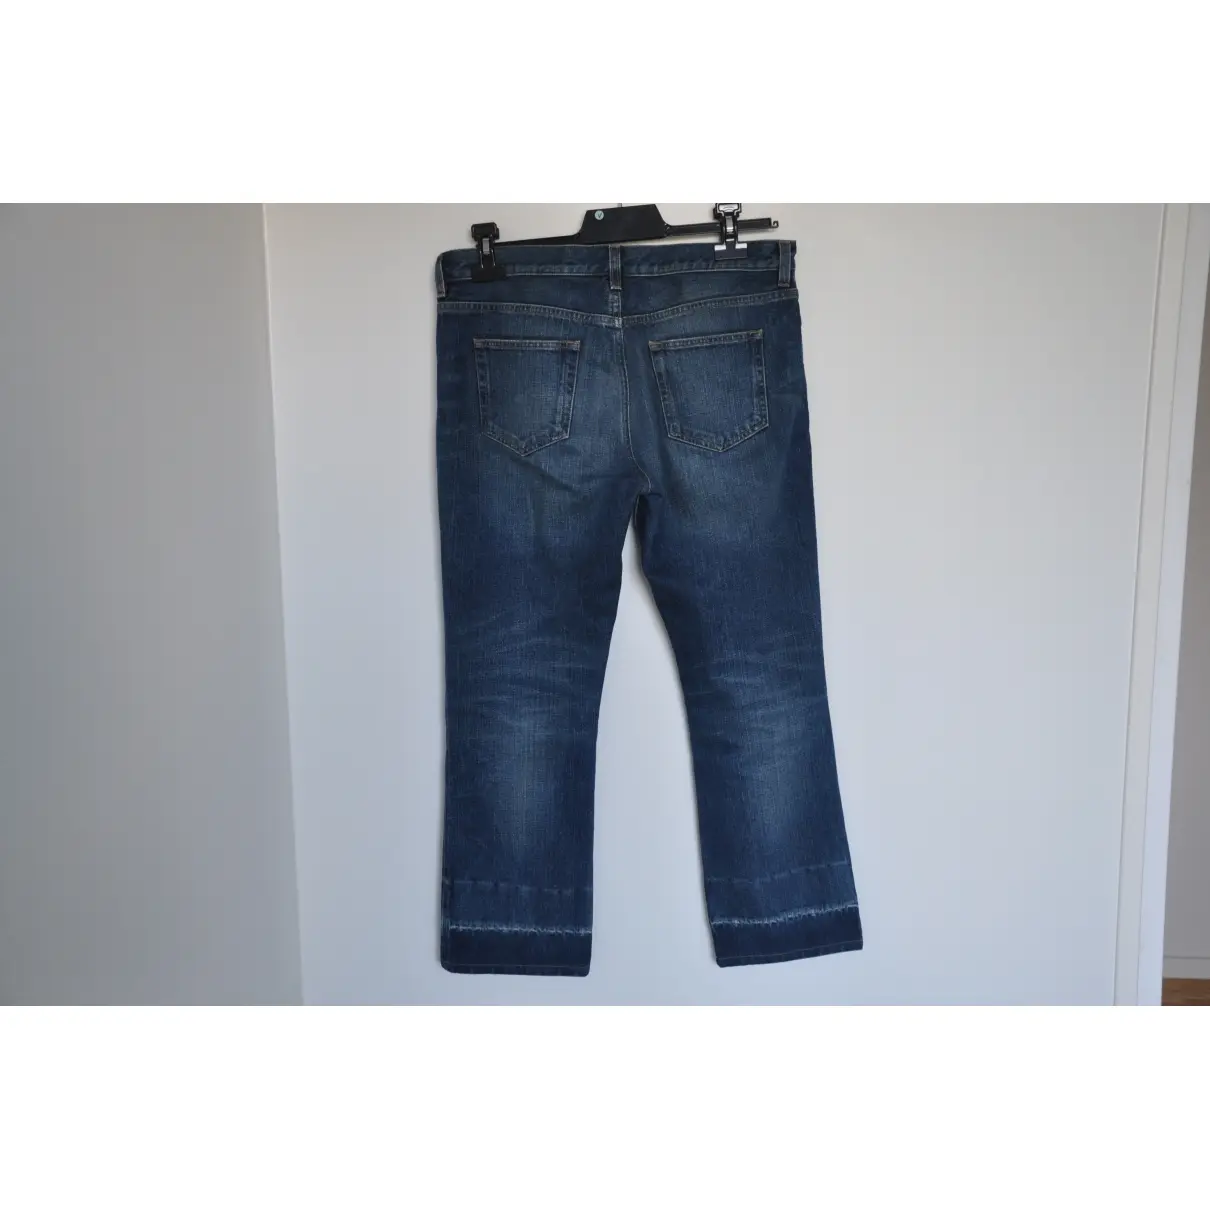 Buy Celine Short jeans online